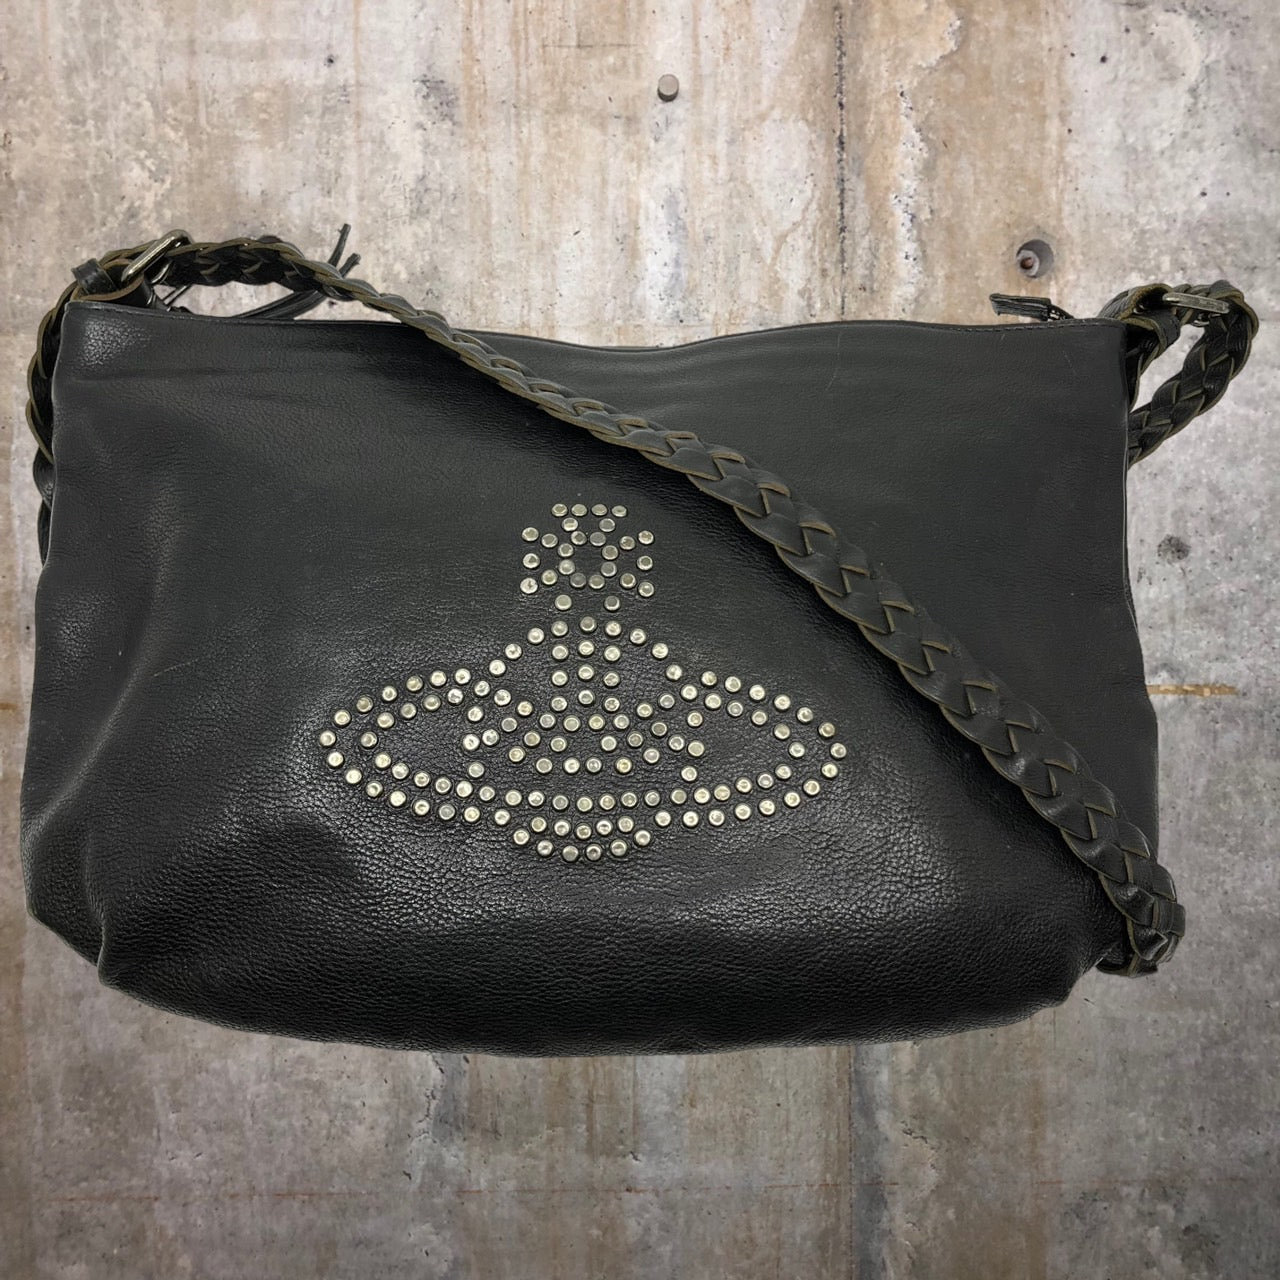 Vivienne Westwood(ヴィヴィアンウエストウッド) orb  studs leather shoulder bag/オーブスタッズレザーショルダーバッグ ブラック